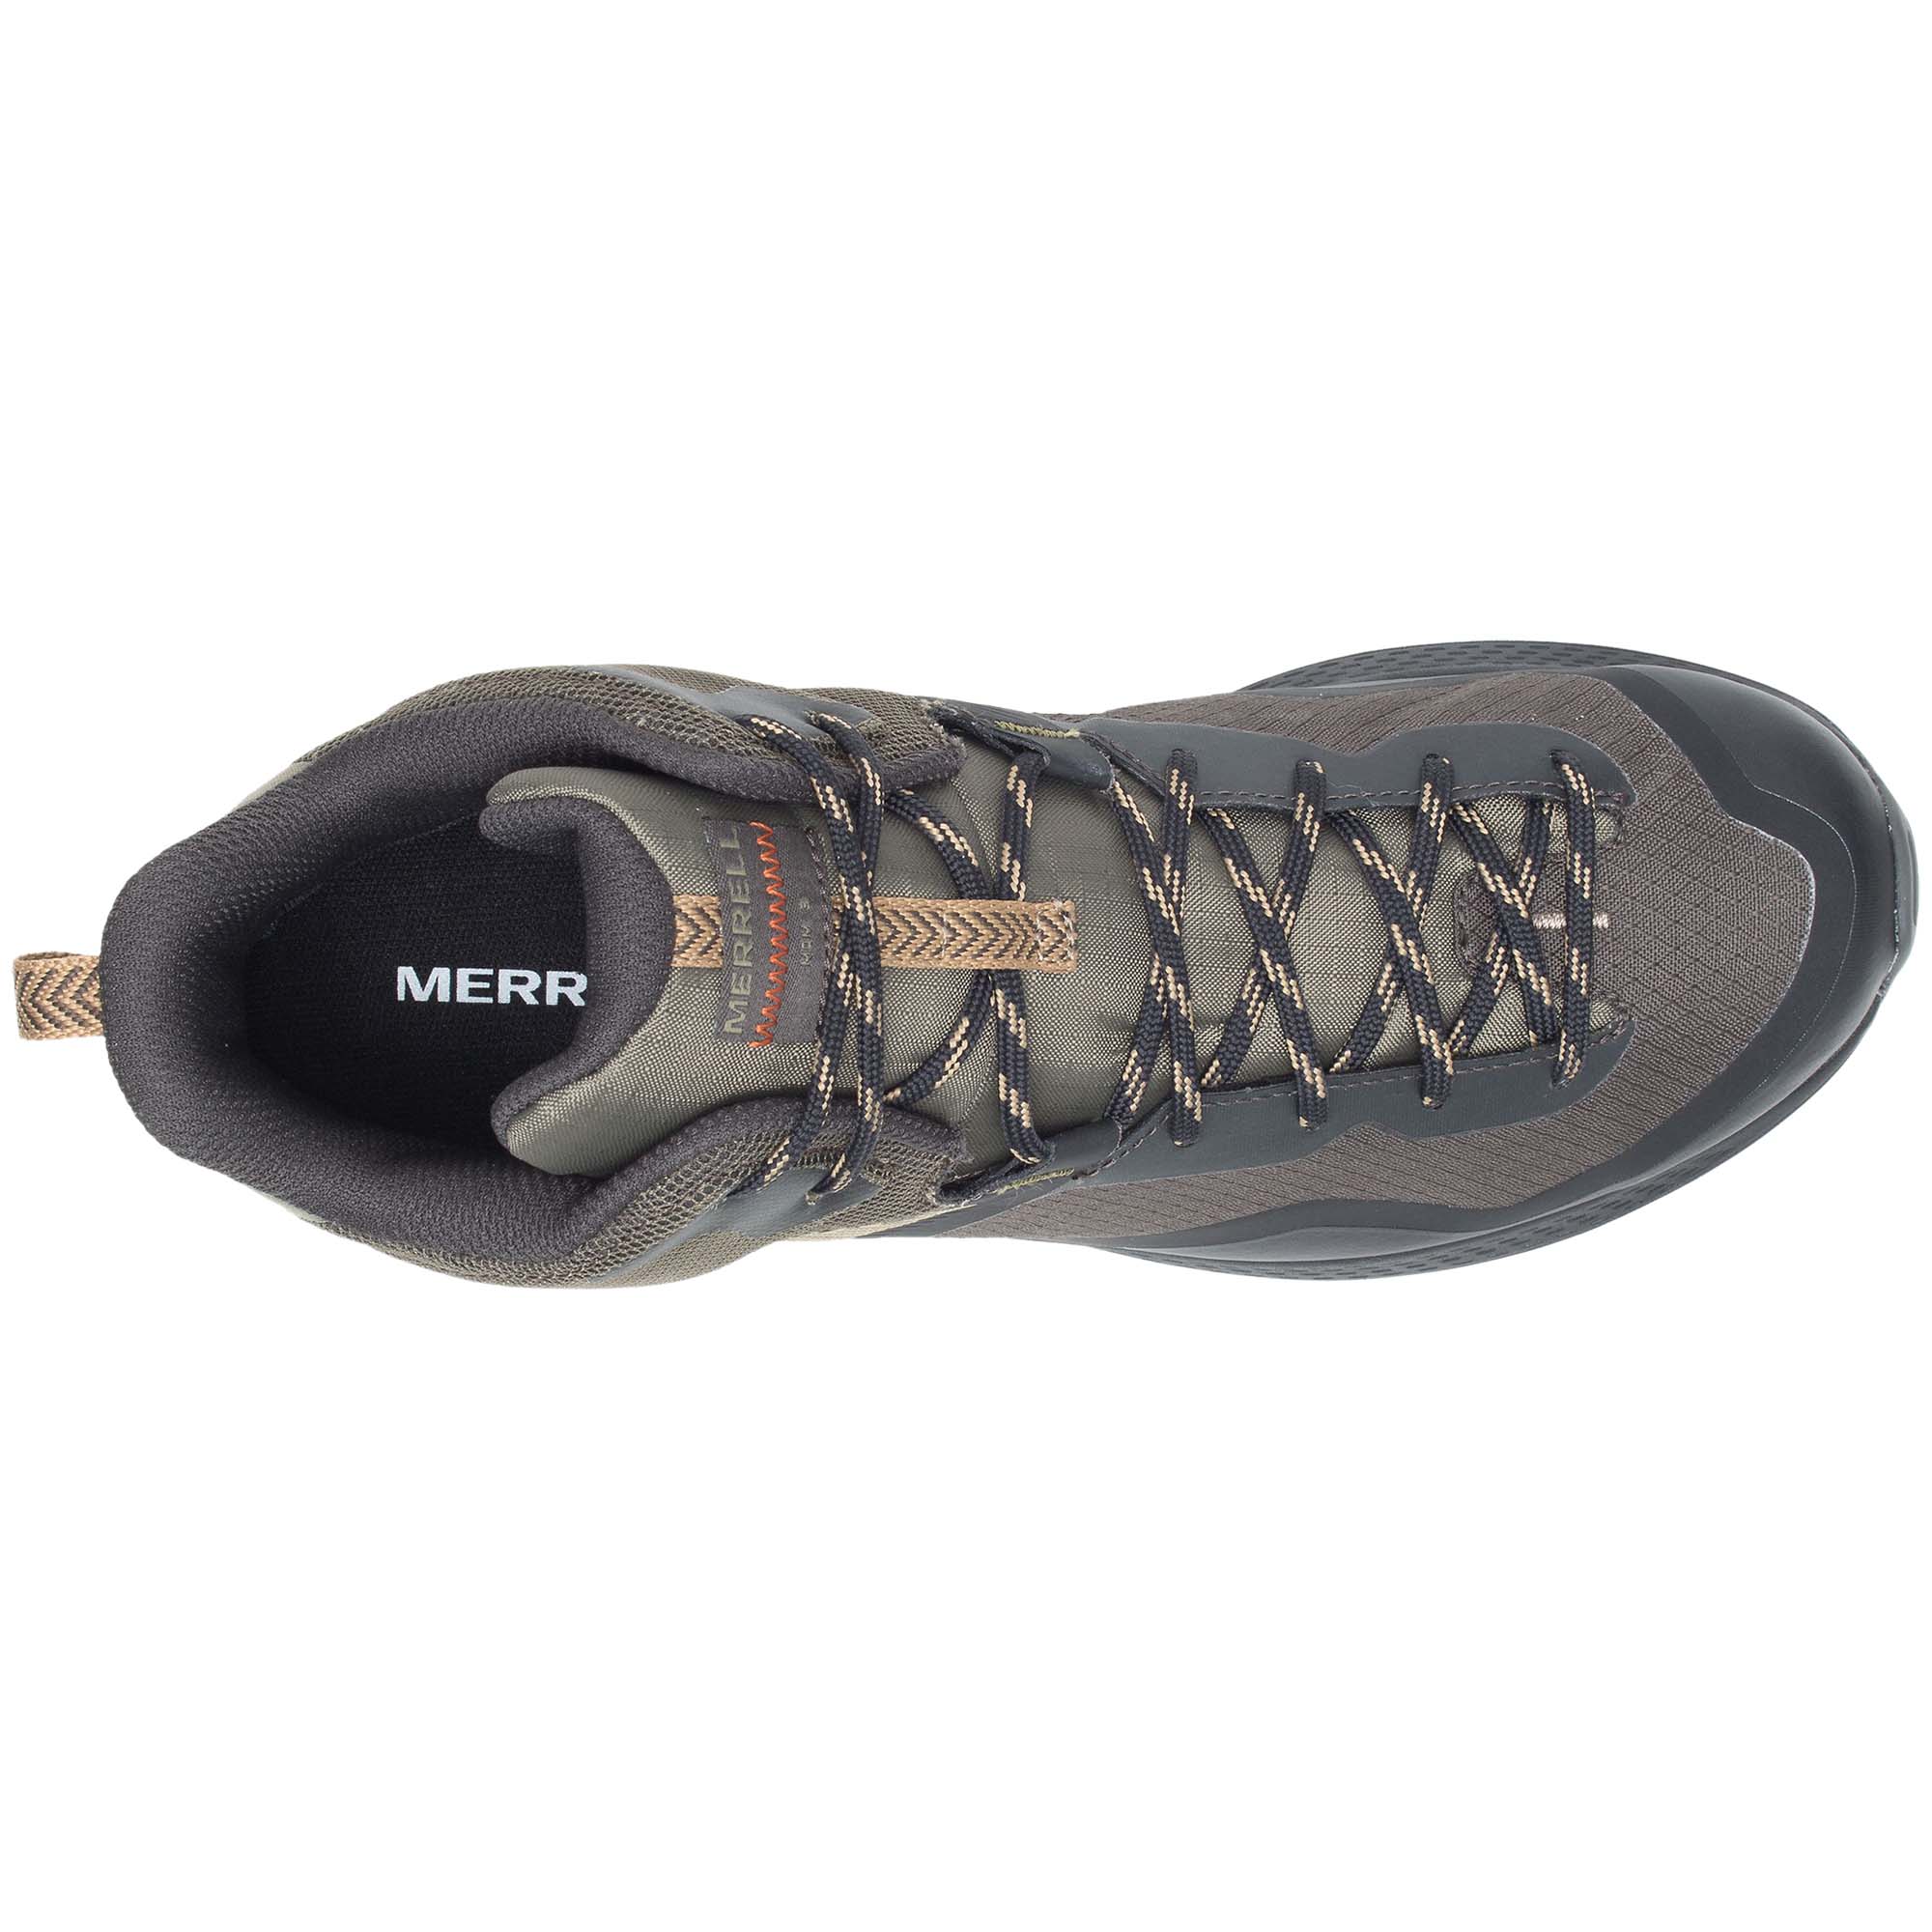 Merrell MQM 3 Mid GTX Men's Hiking Boots